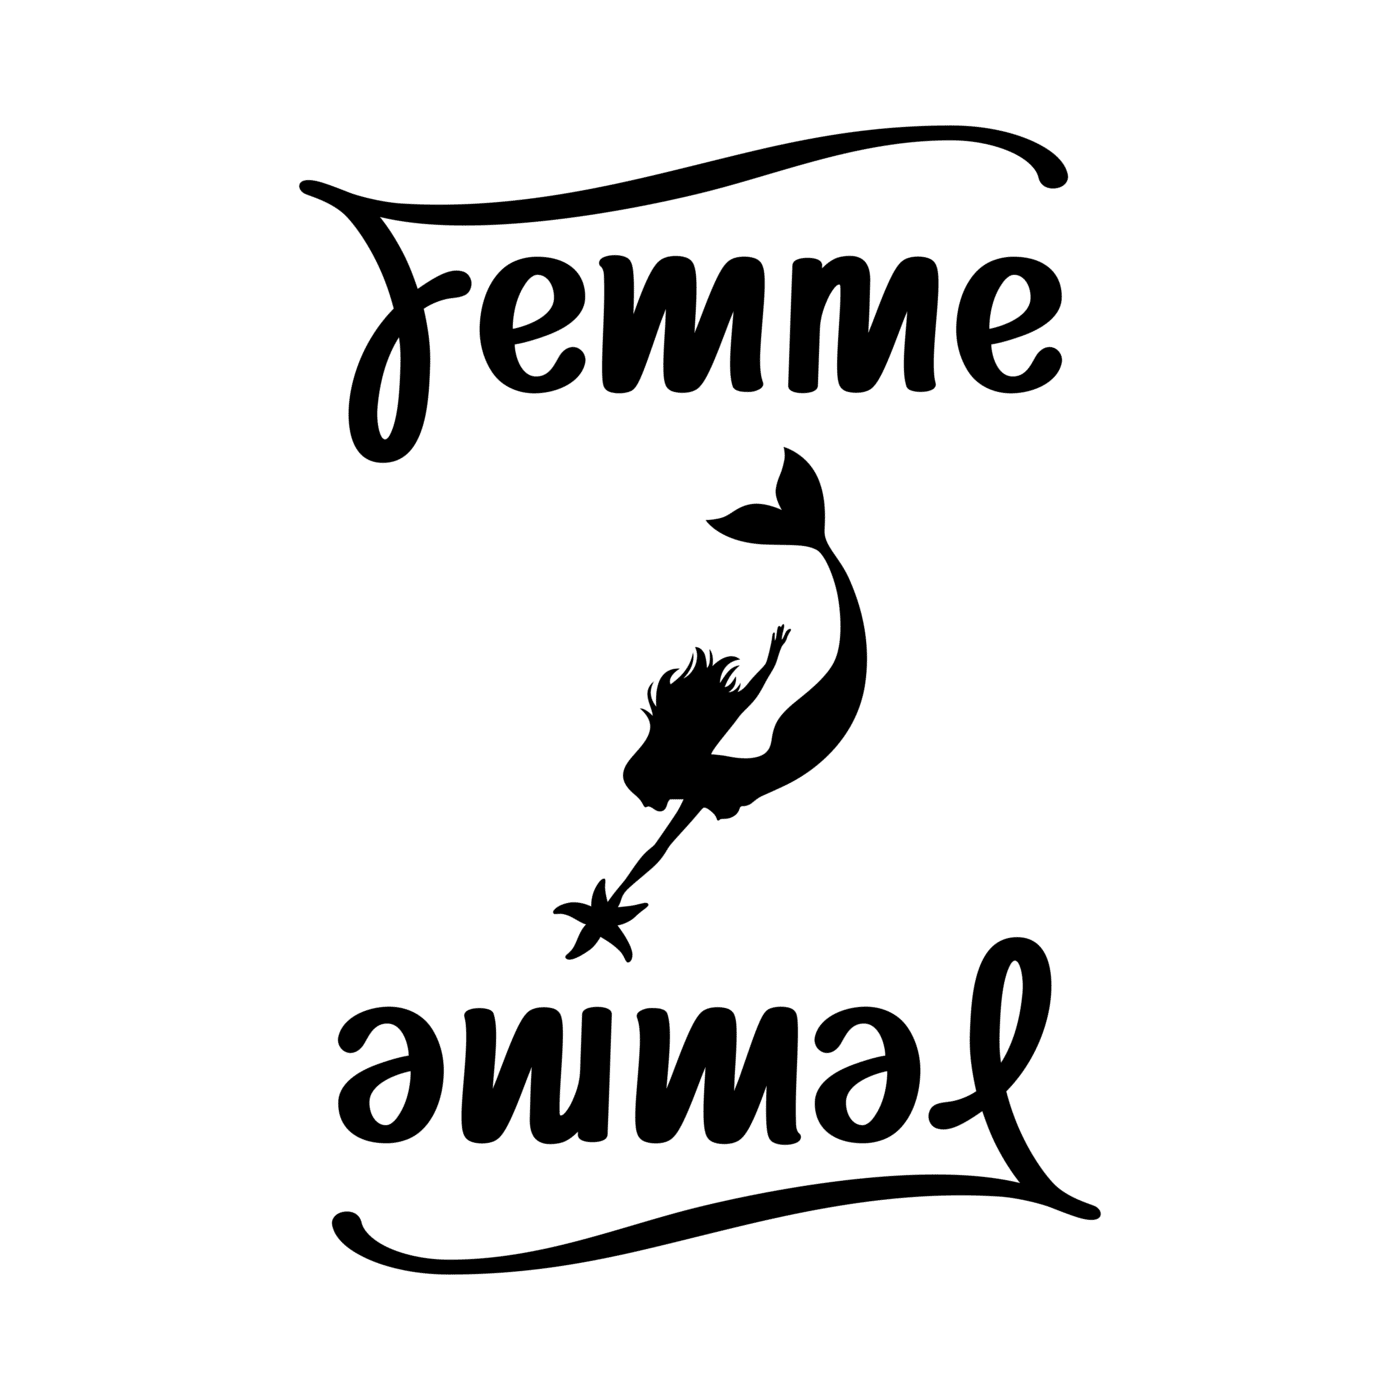 ambigramme Femme Animal sirene